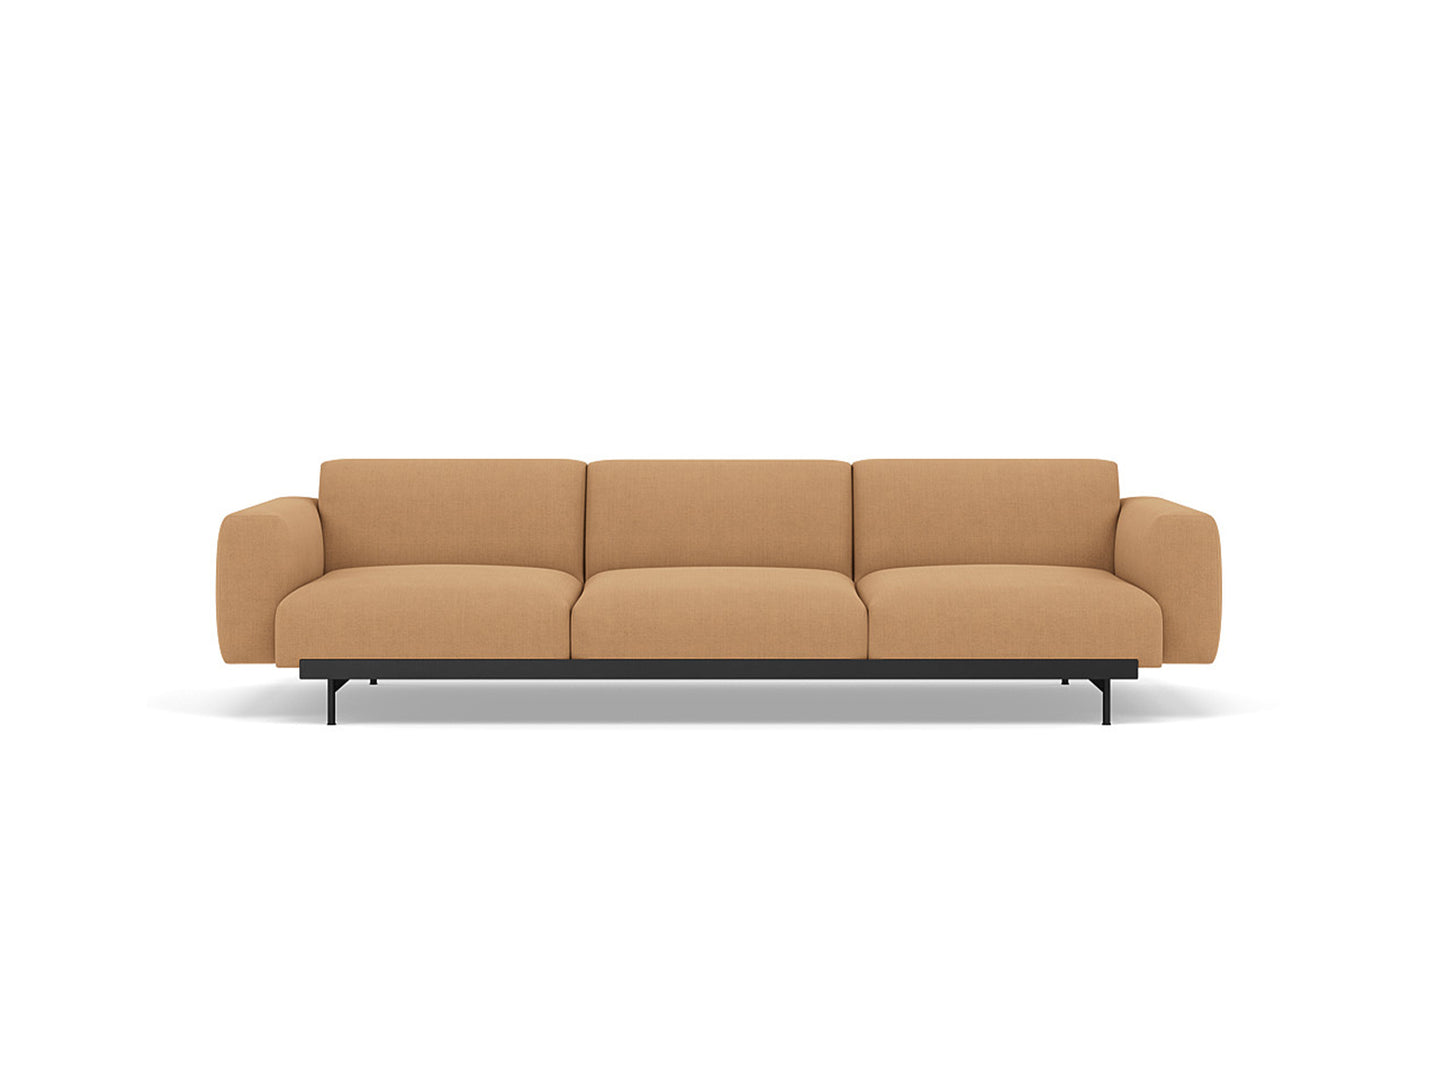 In Situ 3-Seater Modular Sofa by Muuto - Configuration 1 / Fiord 451